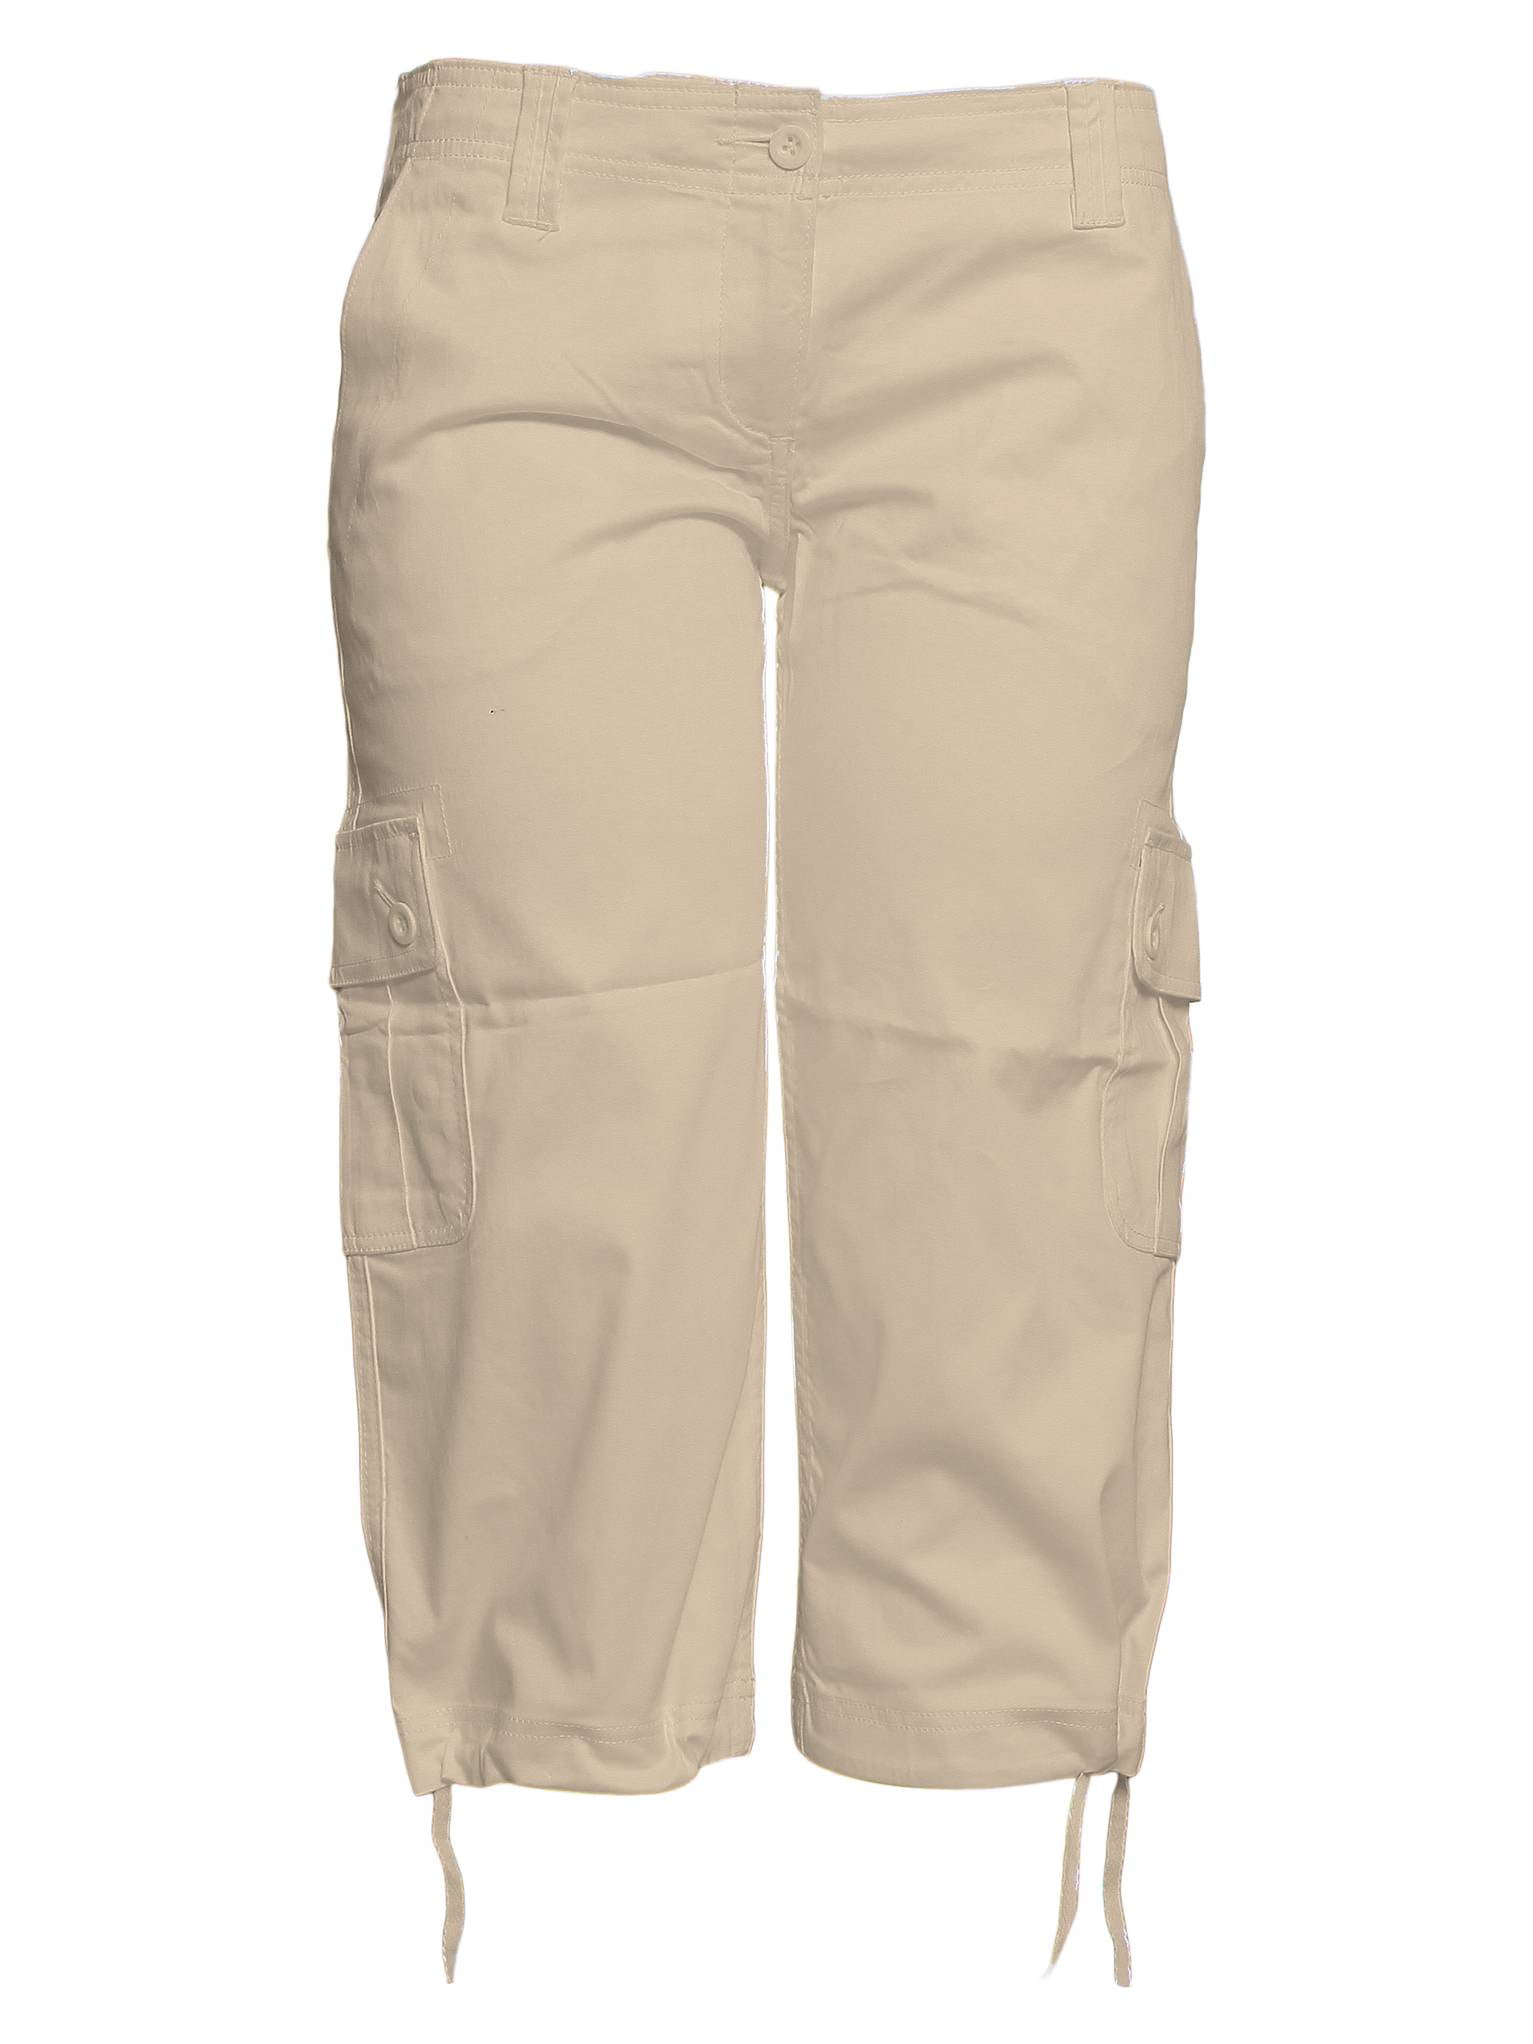 Contemporary Edge Womens Capri Pants - Khaki Tan- Size 10 | Walmart Canada